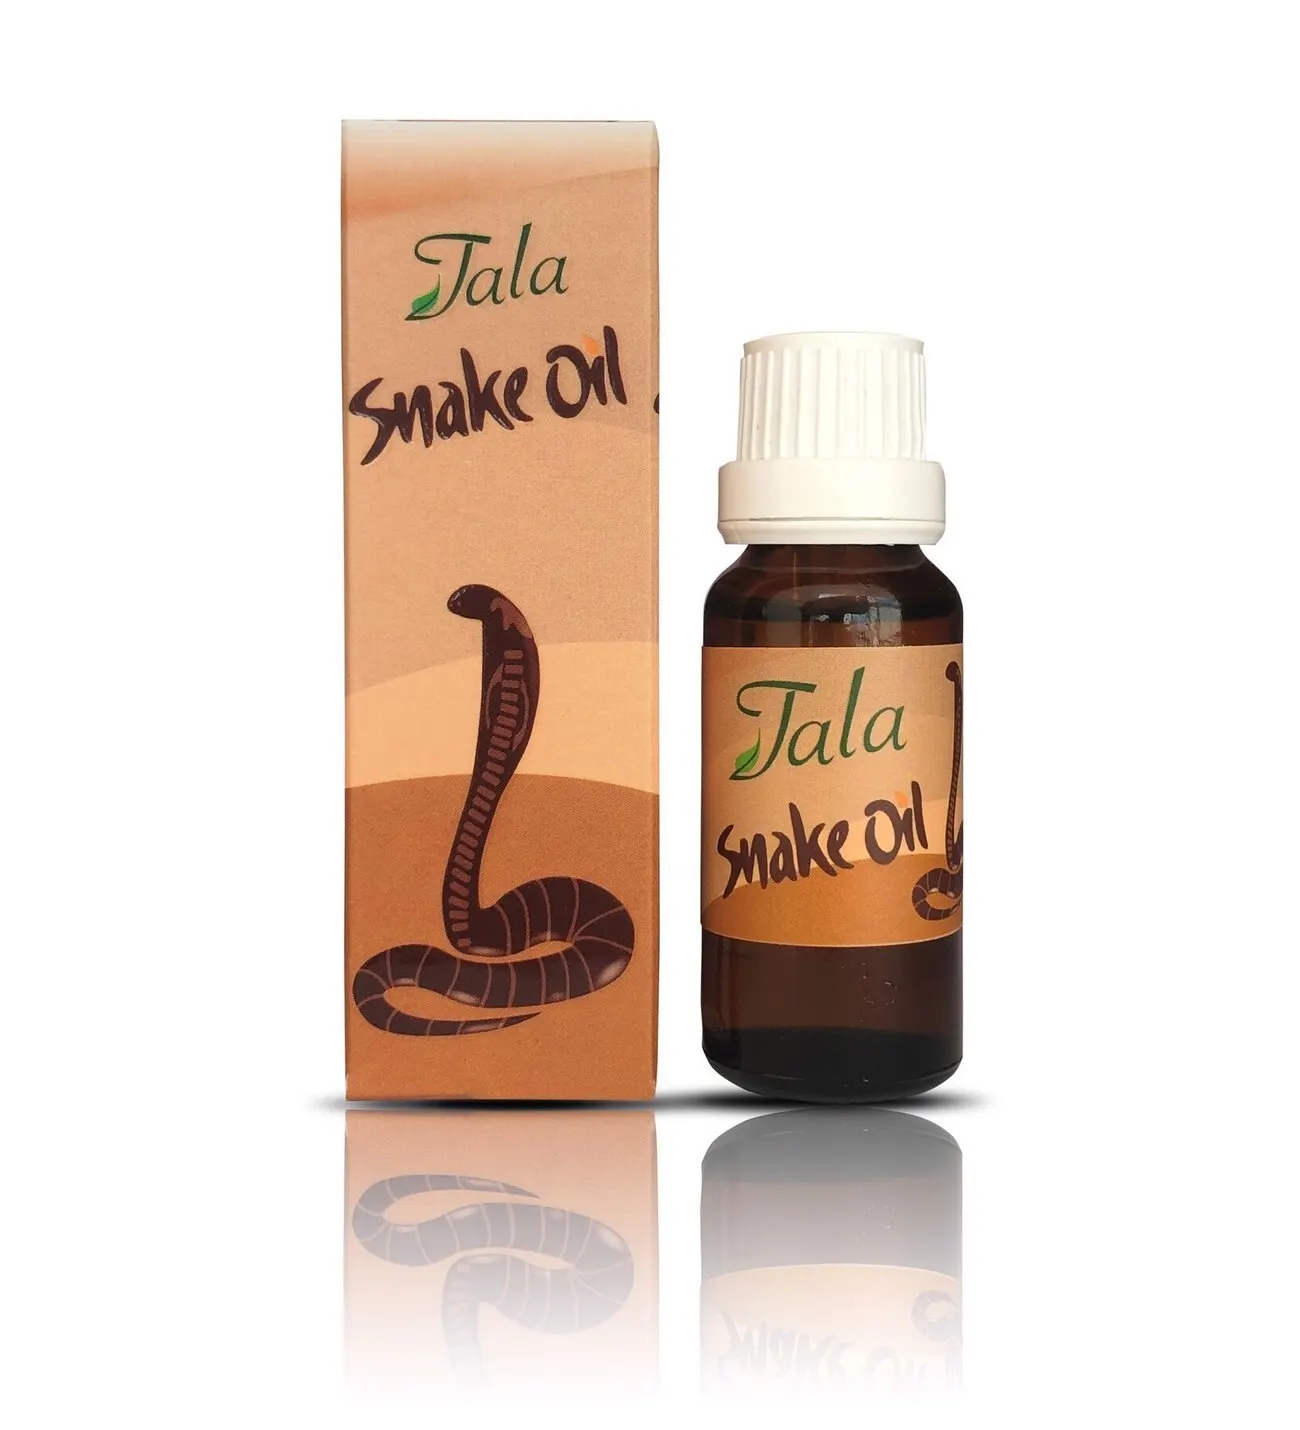 Tala Snake Oil 20 ML Hair Growth Vice Permanent Solution For Loss Hair The Hair Follicles Free Shipping Original Treatment Natural Vitamin Strong